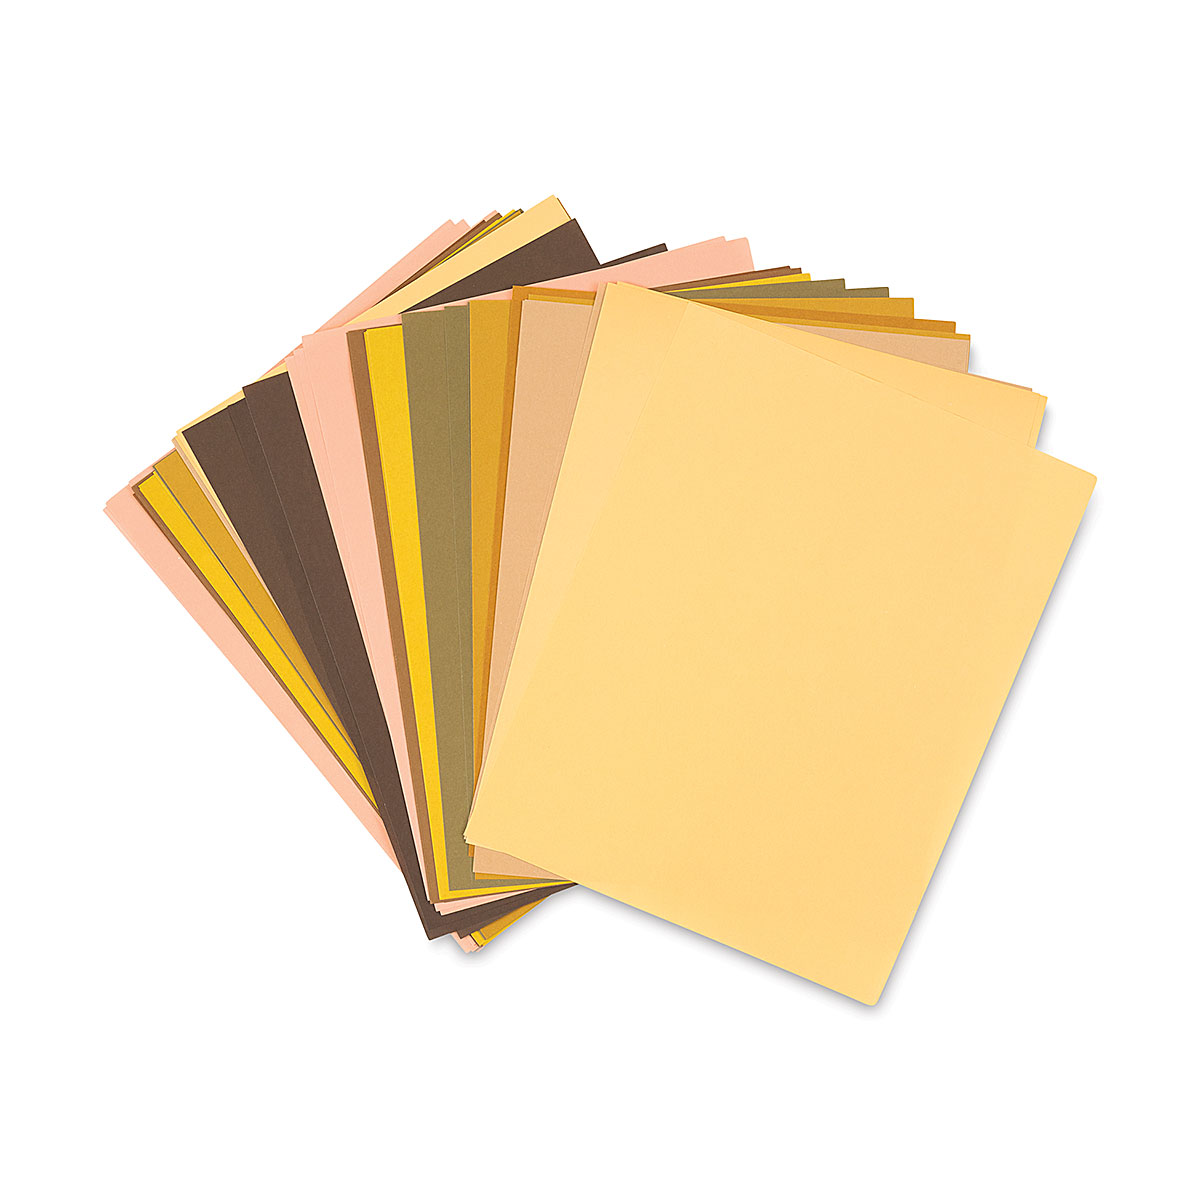 Roylco Skin Tone Craft Paper Pack